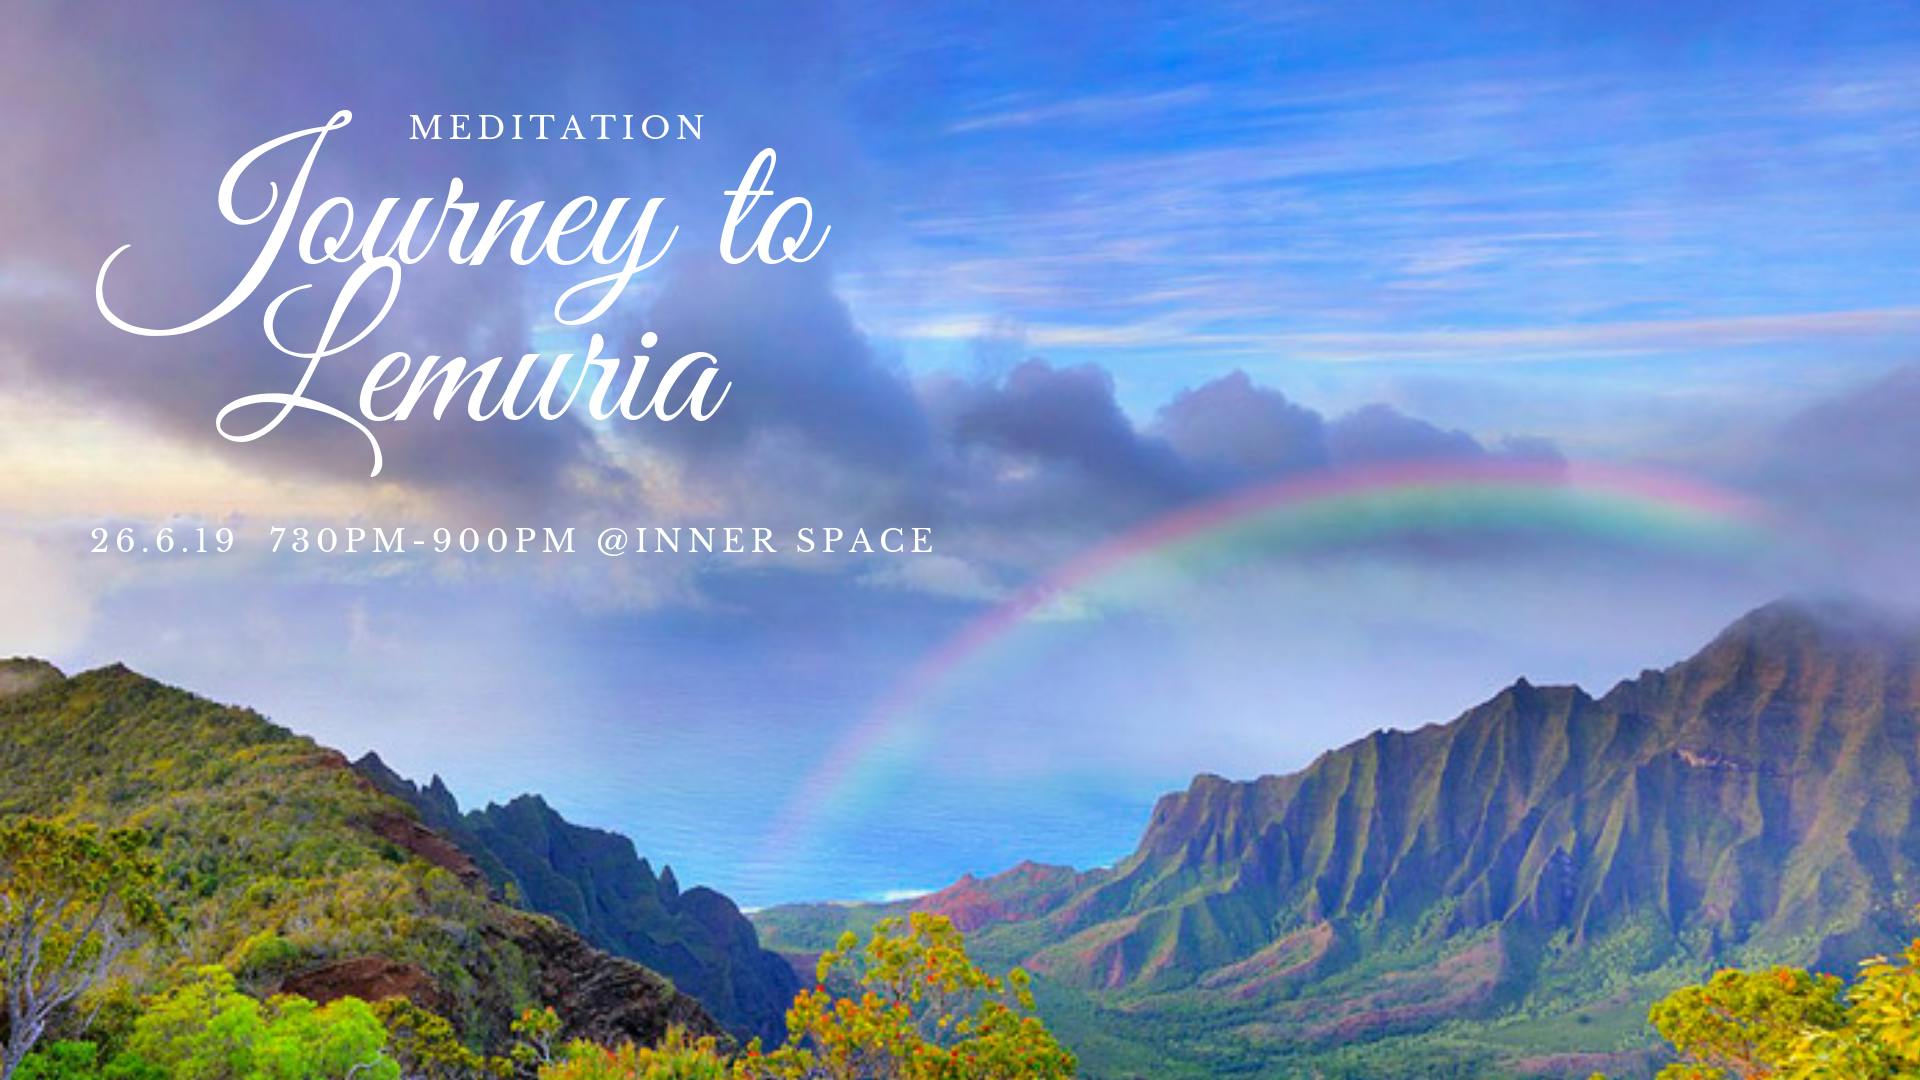 Meditation: Journey to Lemuria